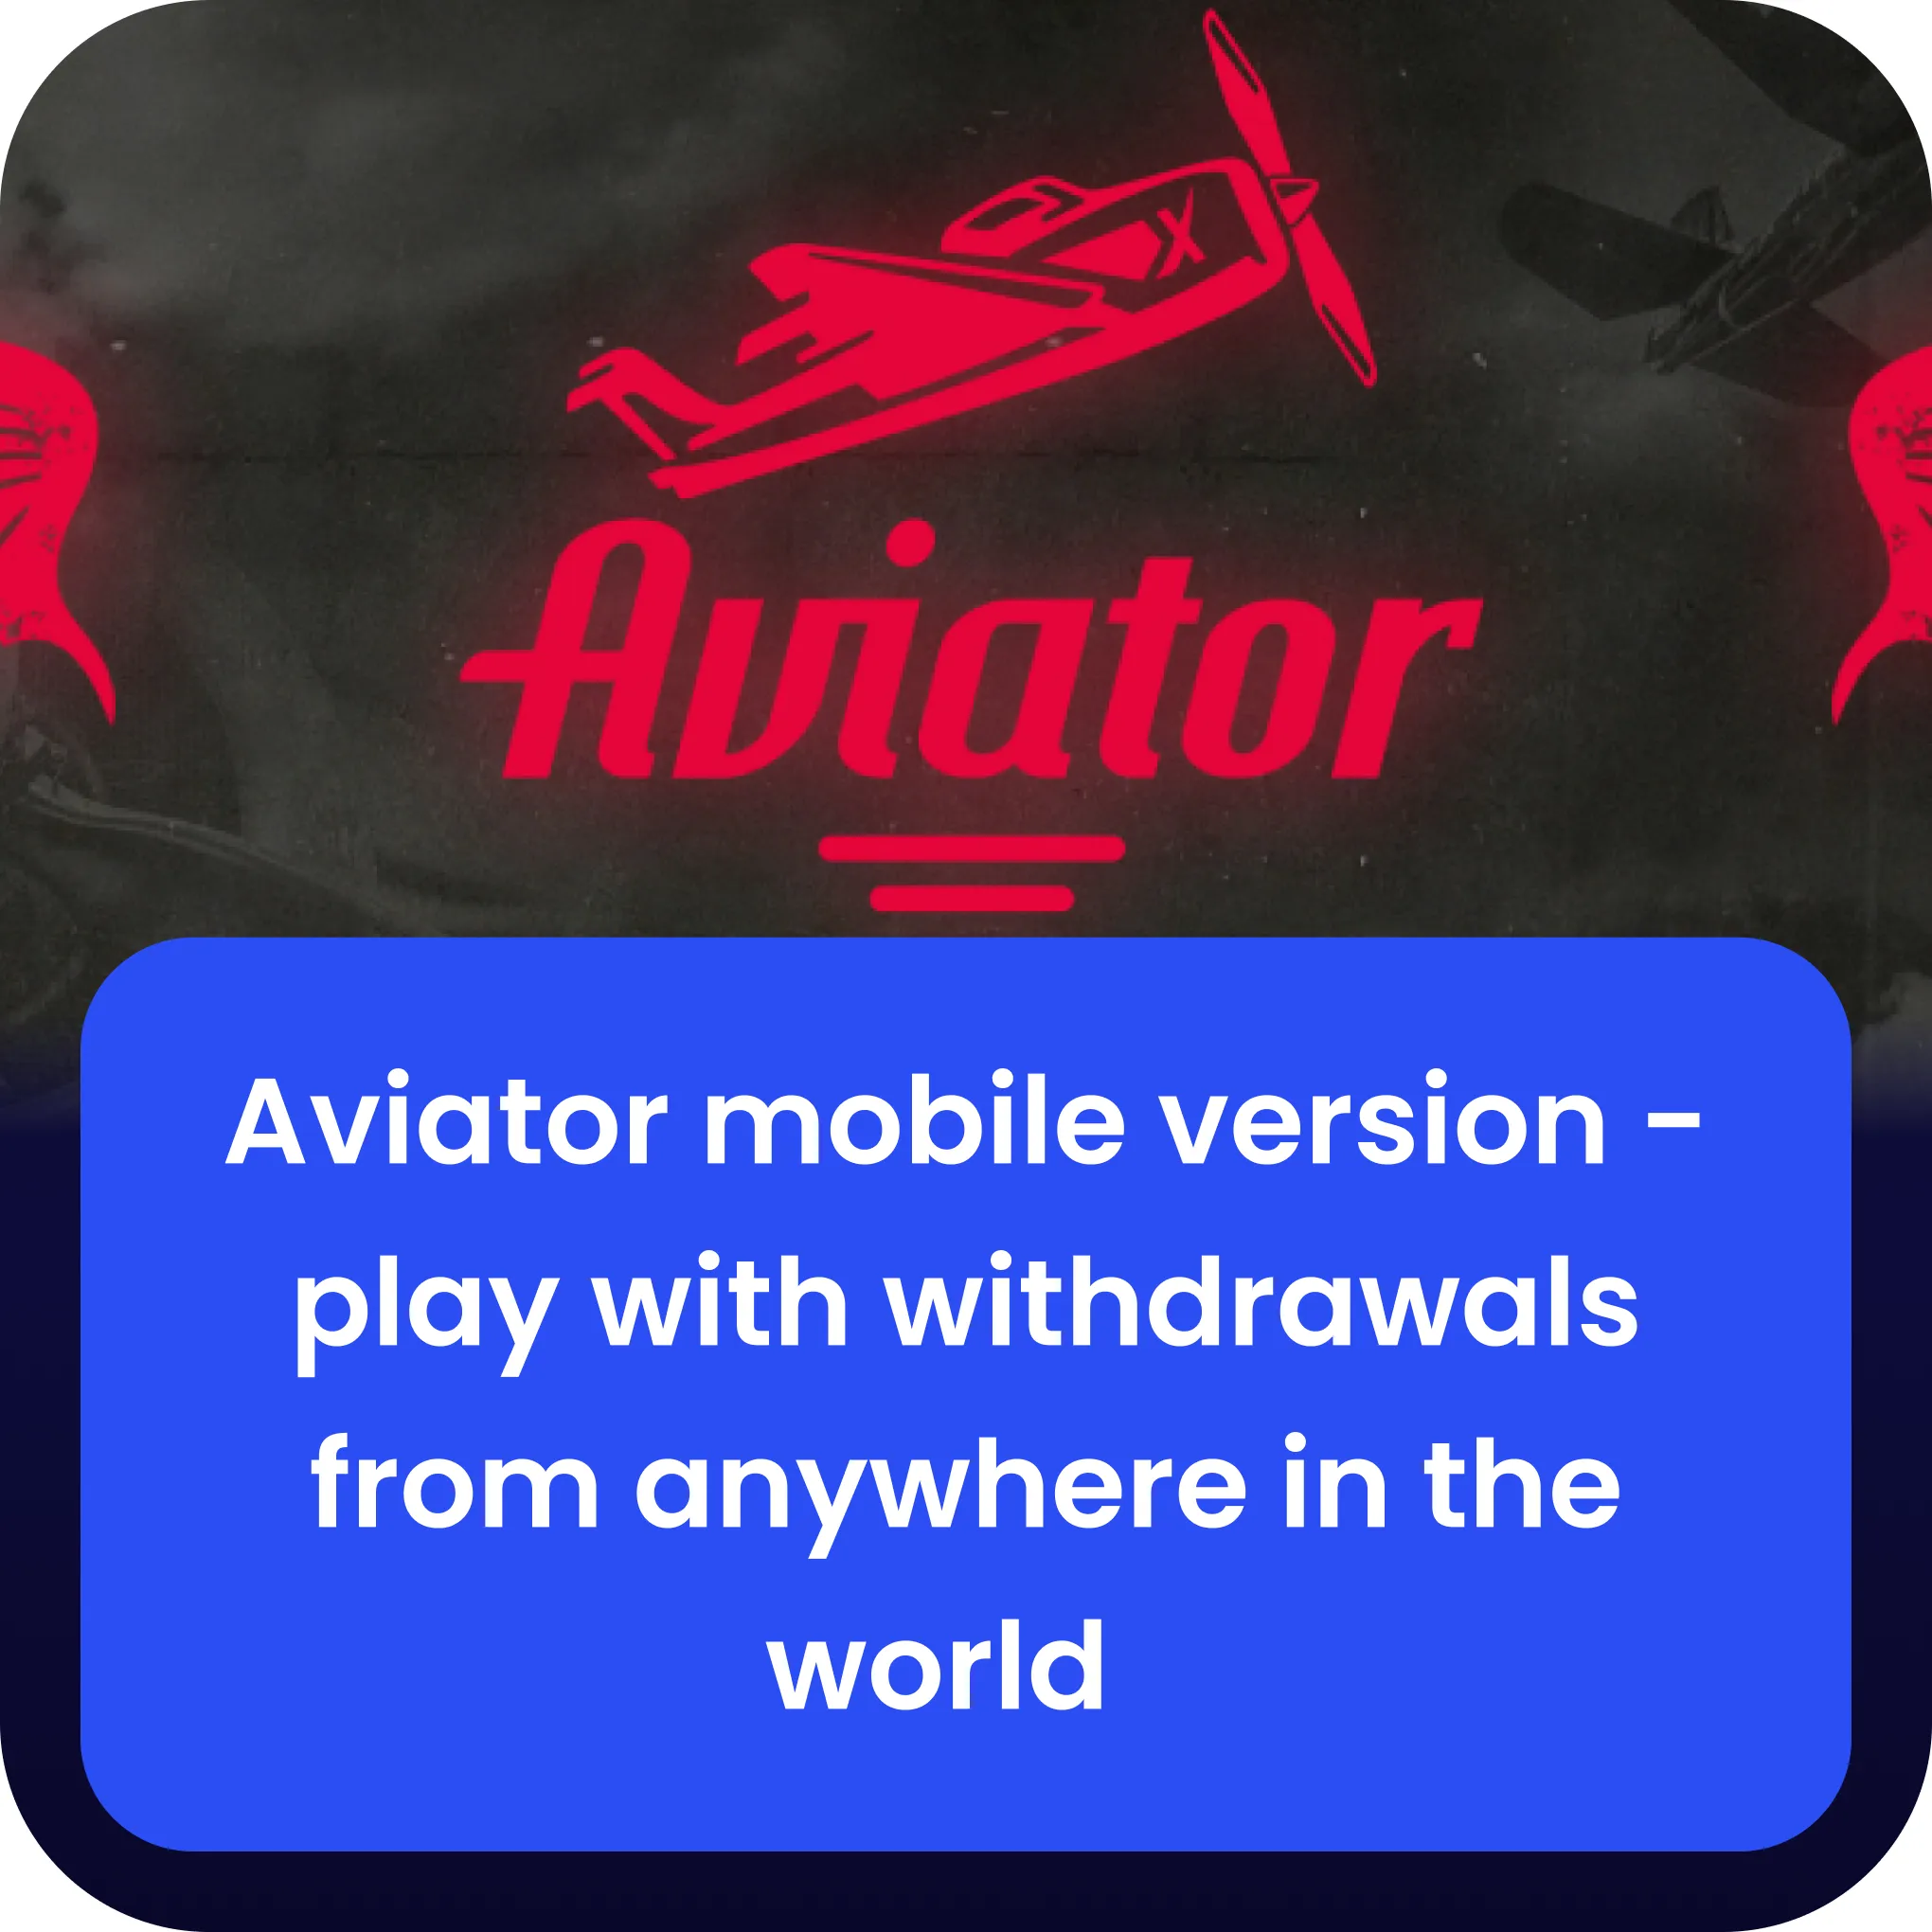 1xslots aviator mobile app